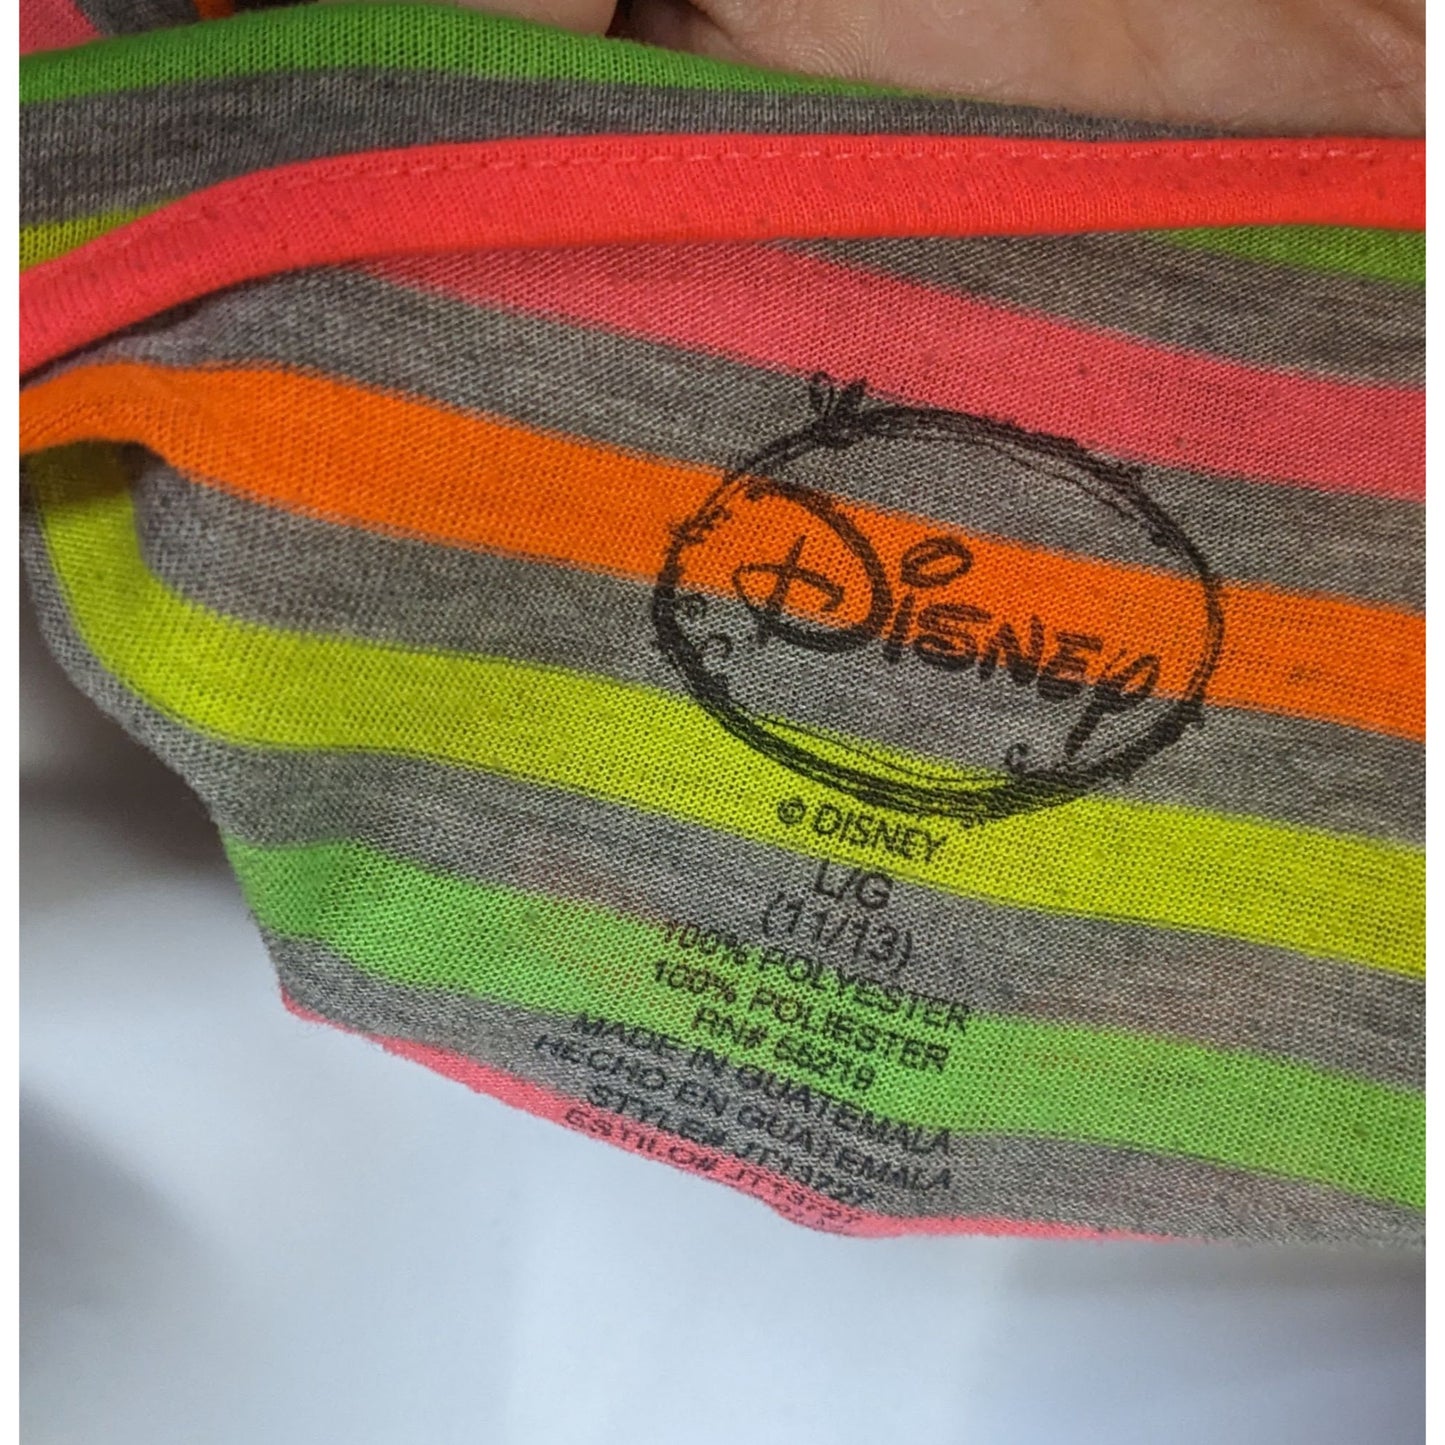 Neon Disney Love More Shirt